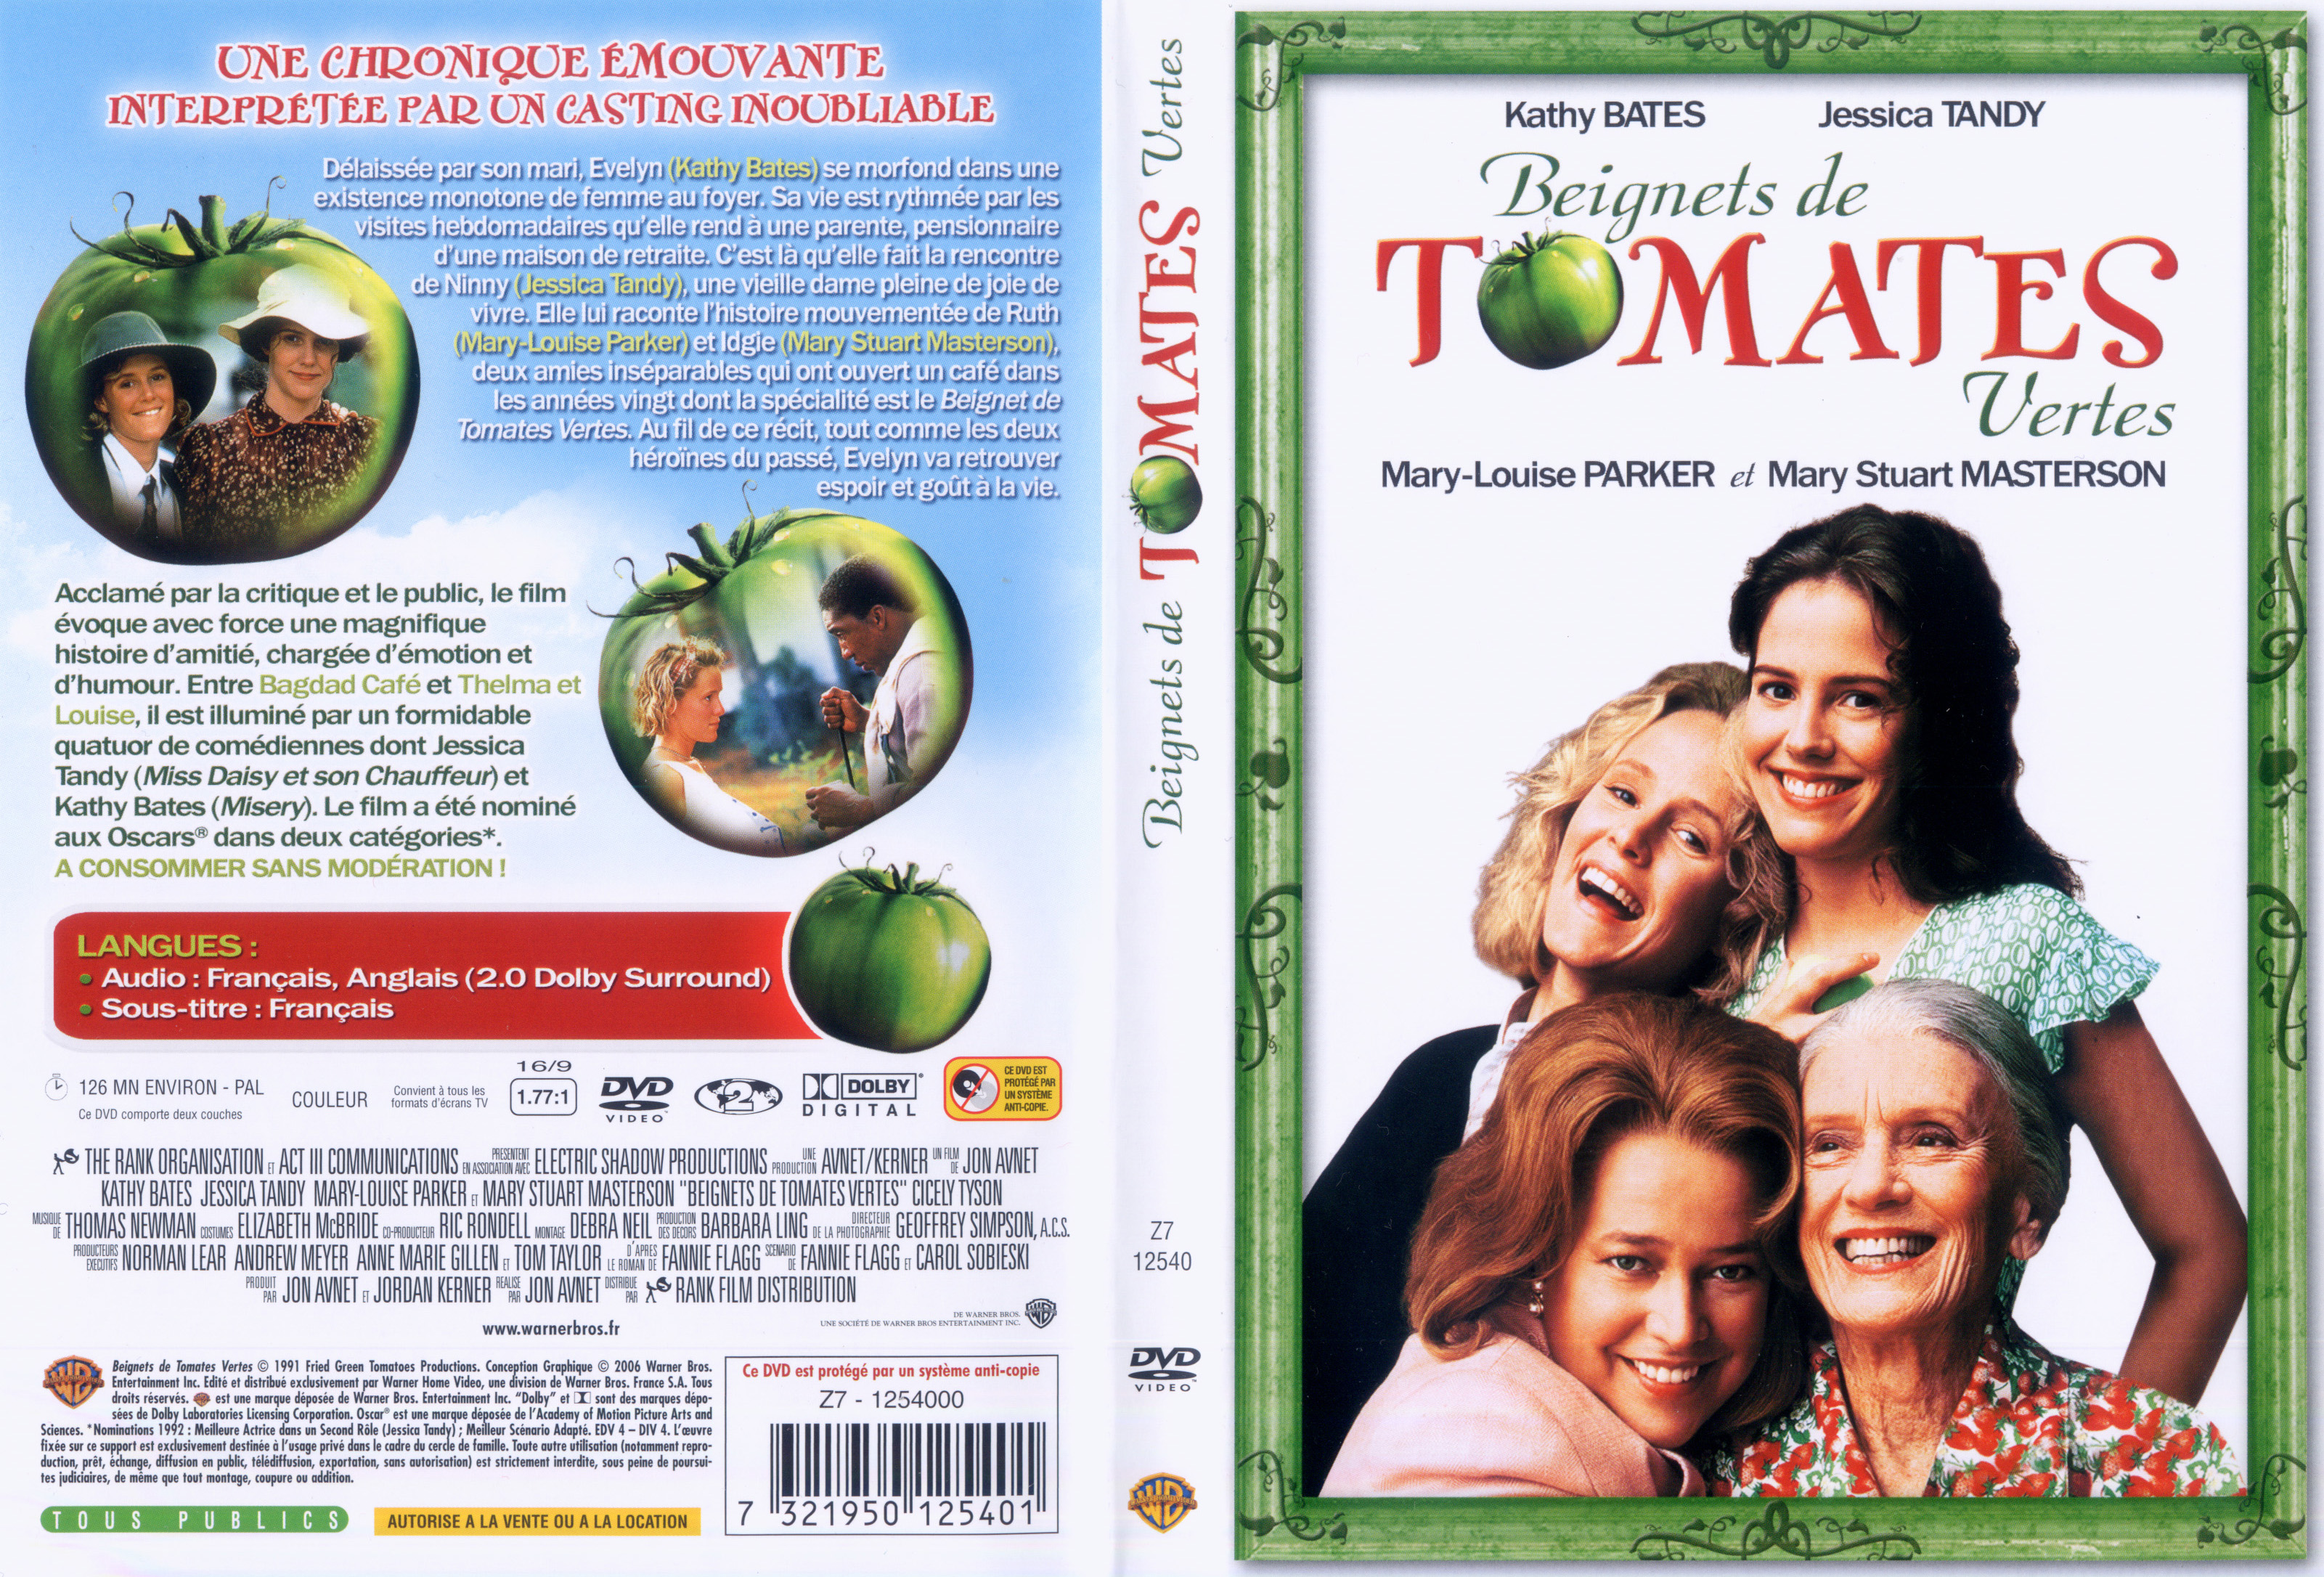 Jaquette DVD Beignets de tomates vertes v2